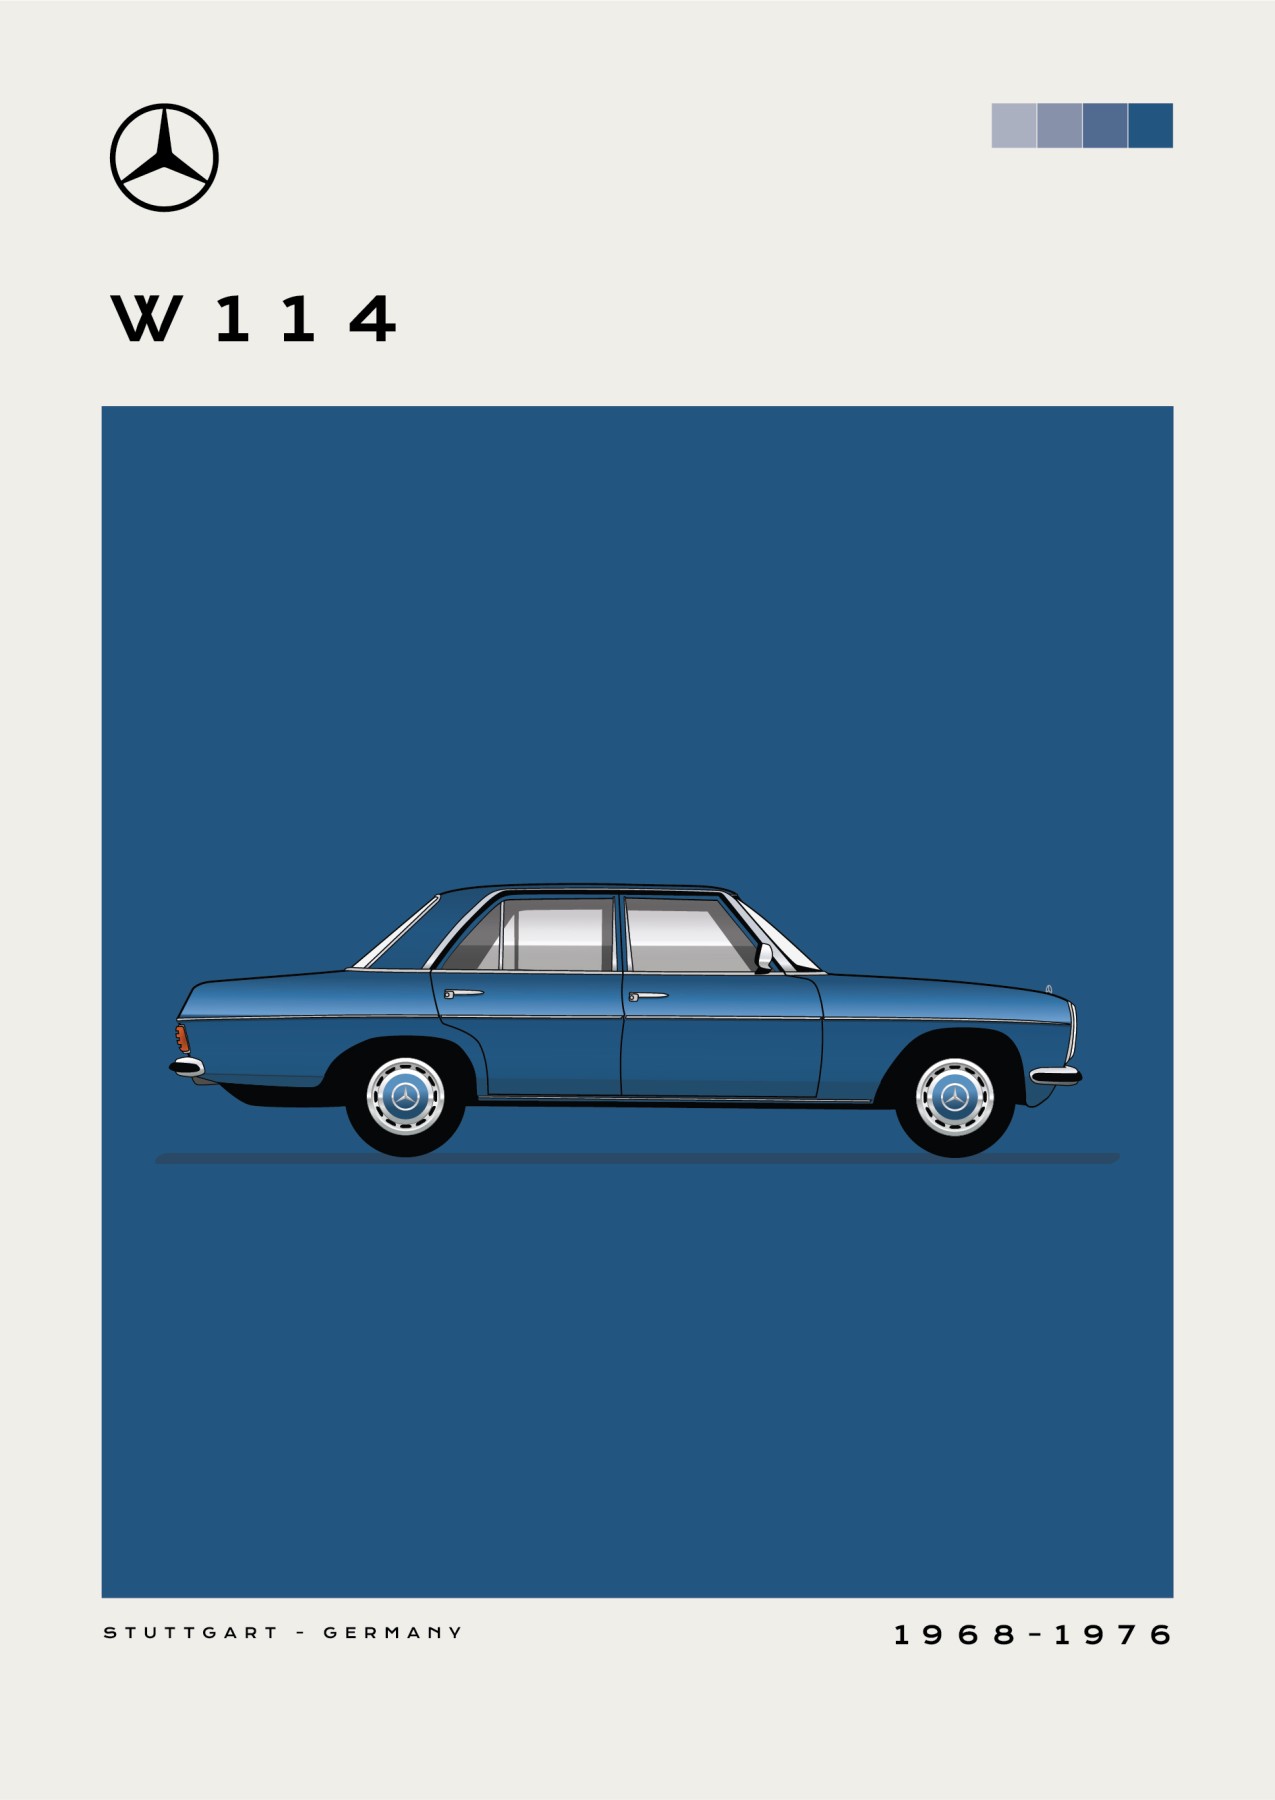 Mercedes – W114 - Blue